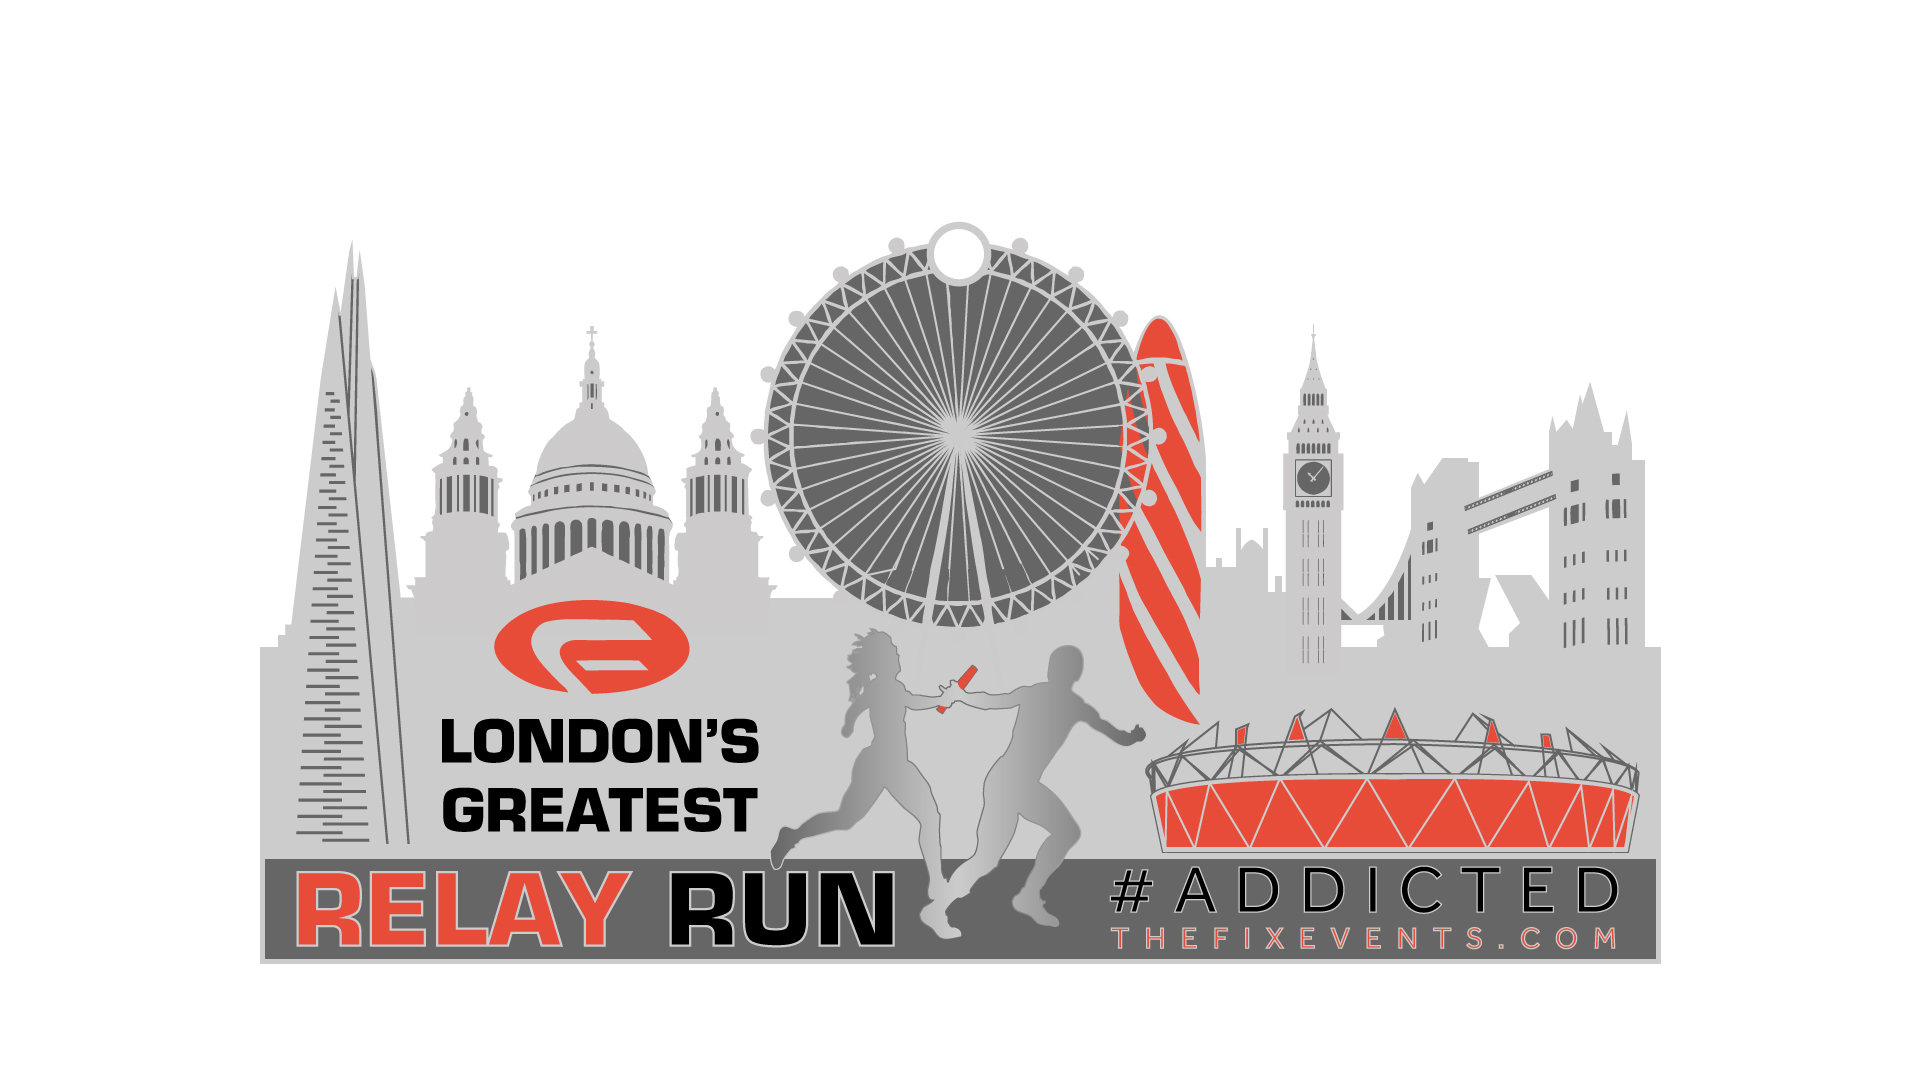 Run London's Greatest Relay Run